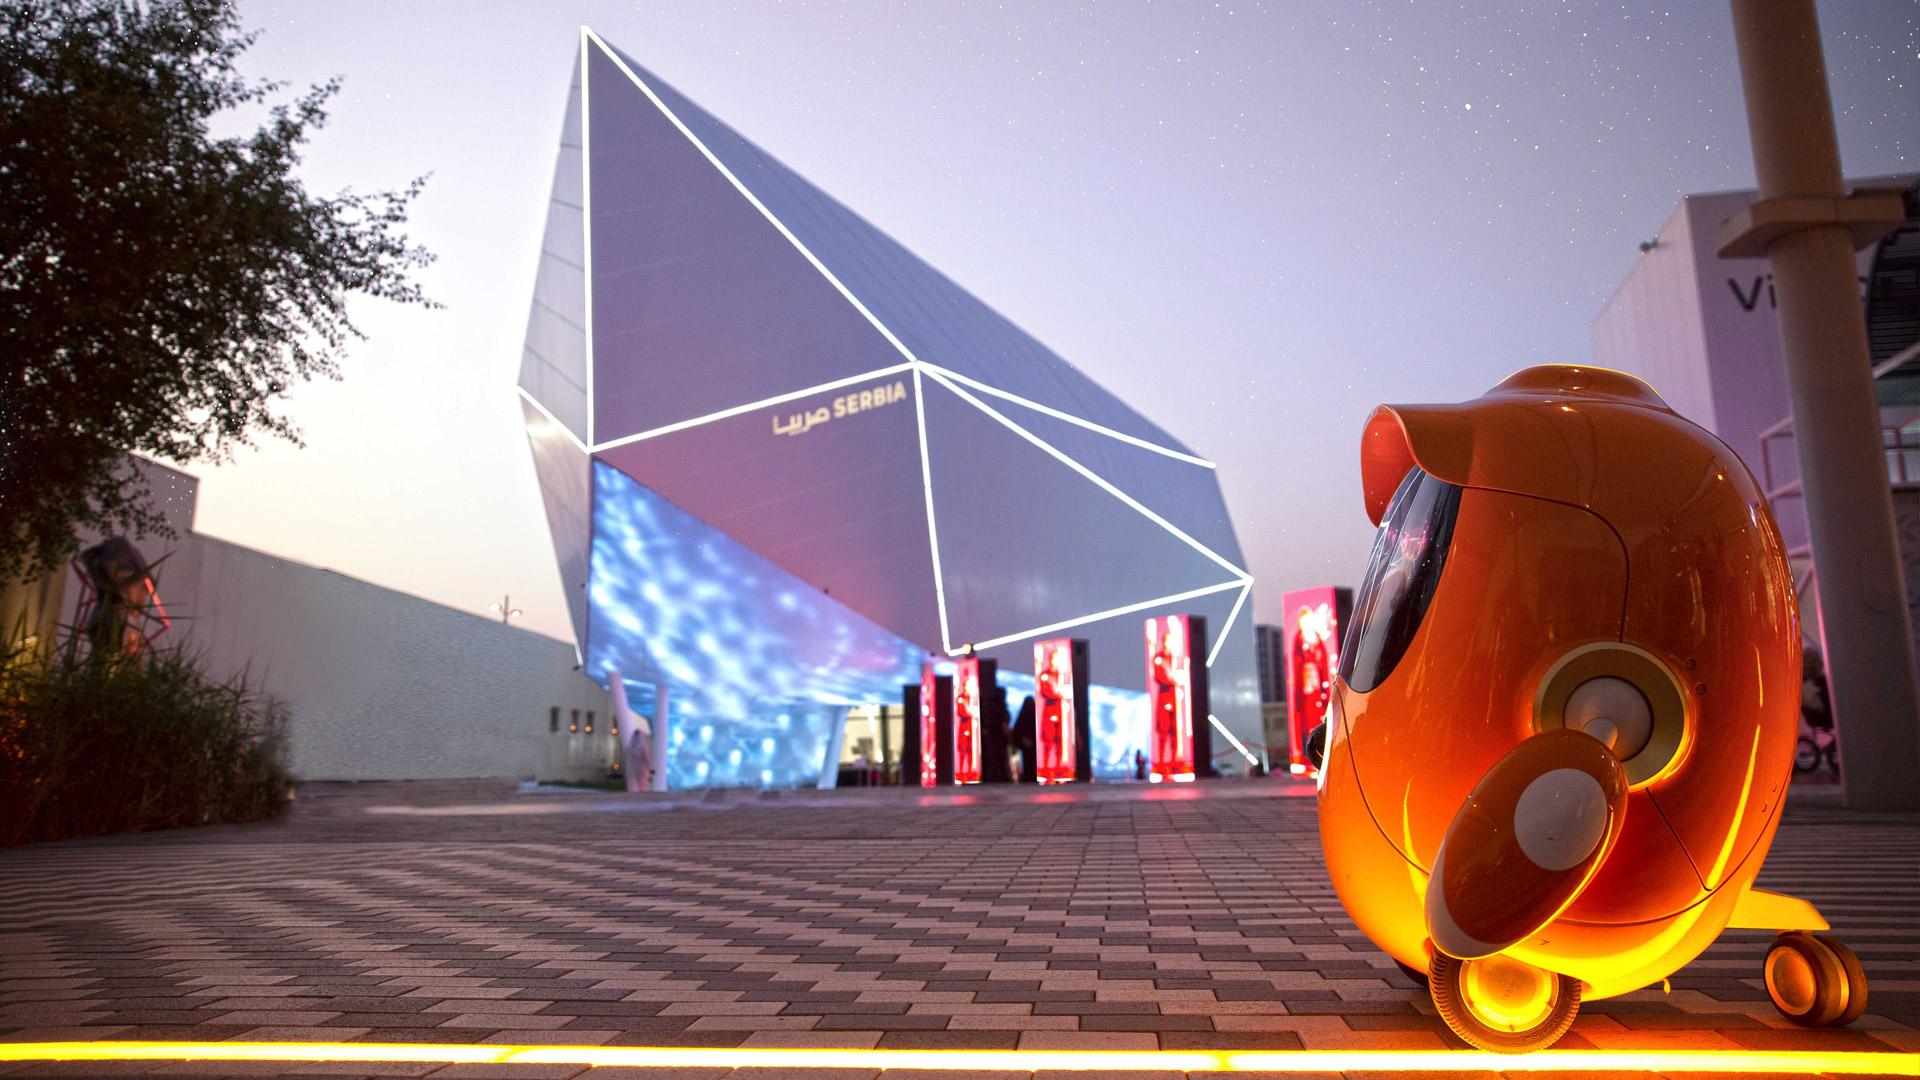 Expo 2020 Dubai completed